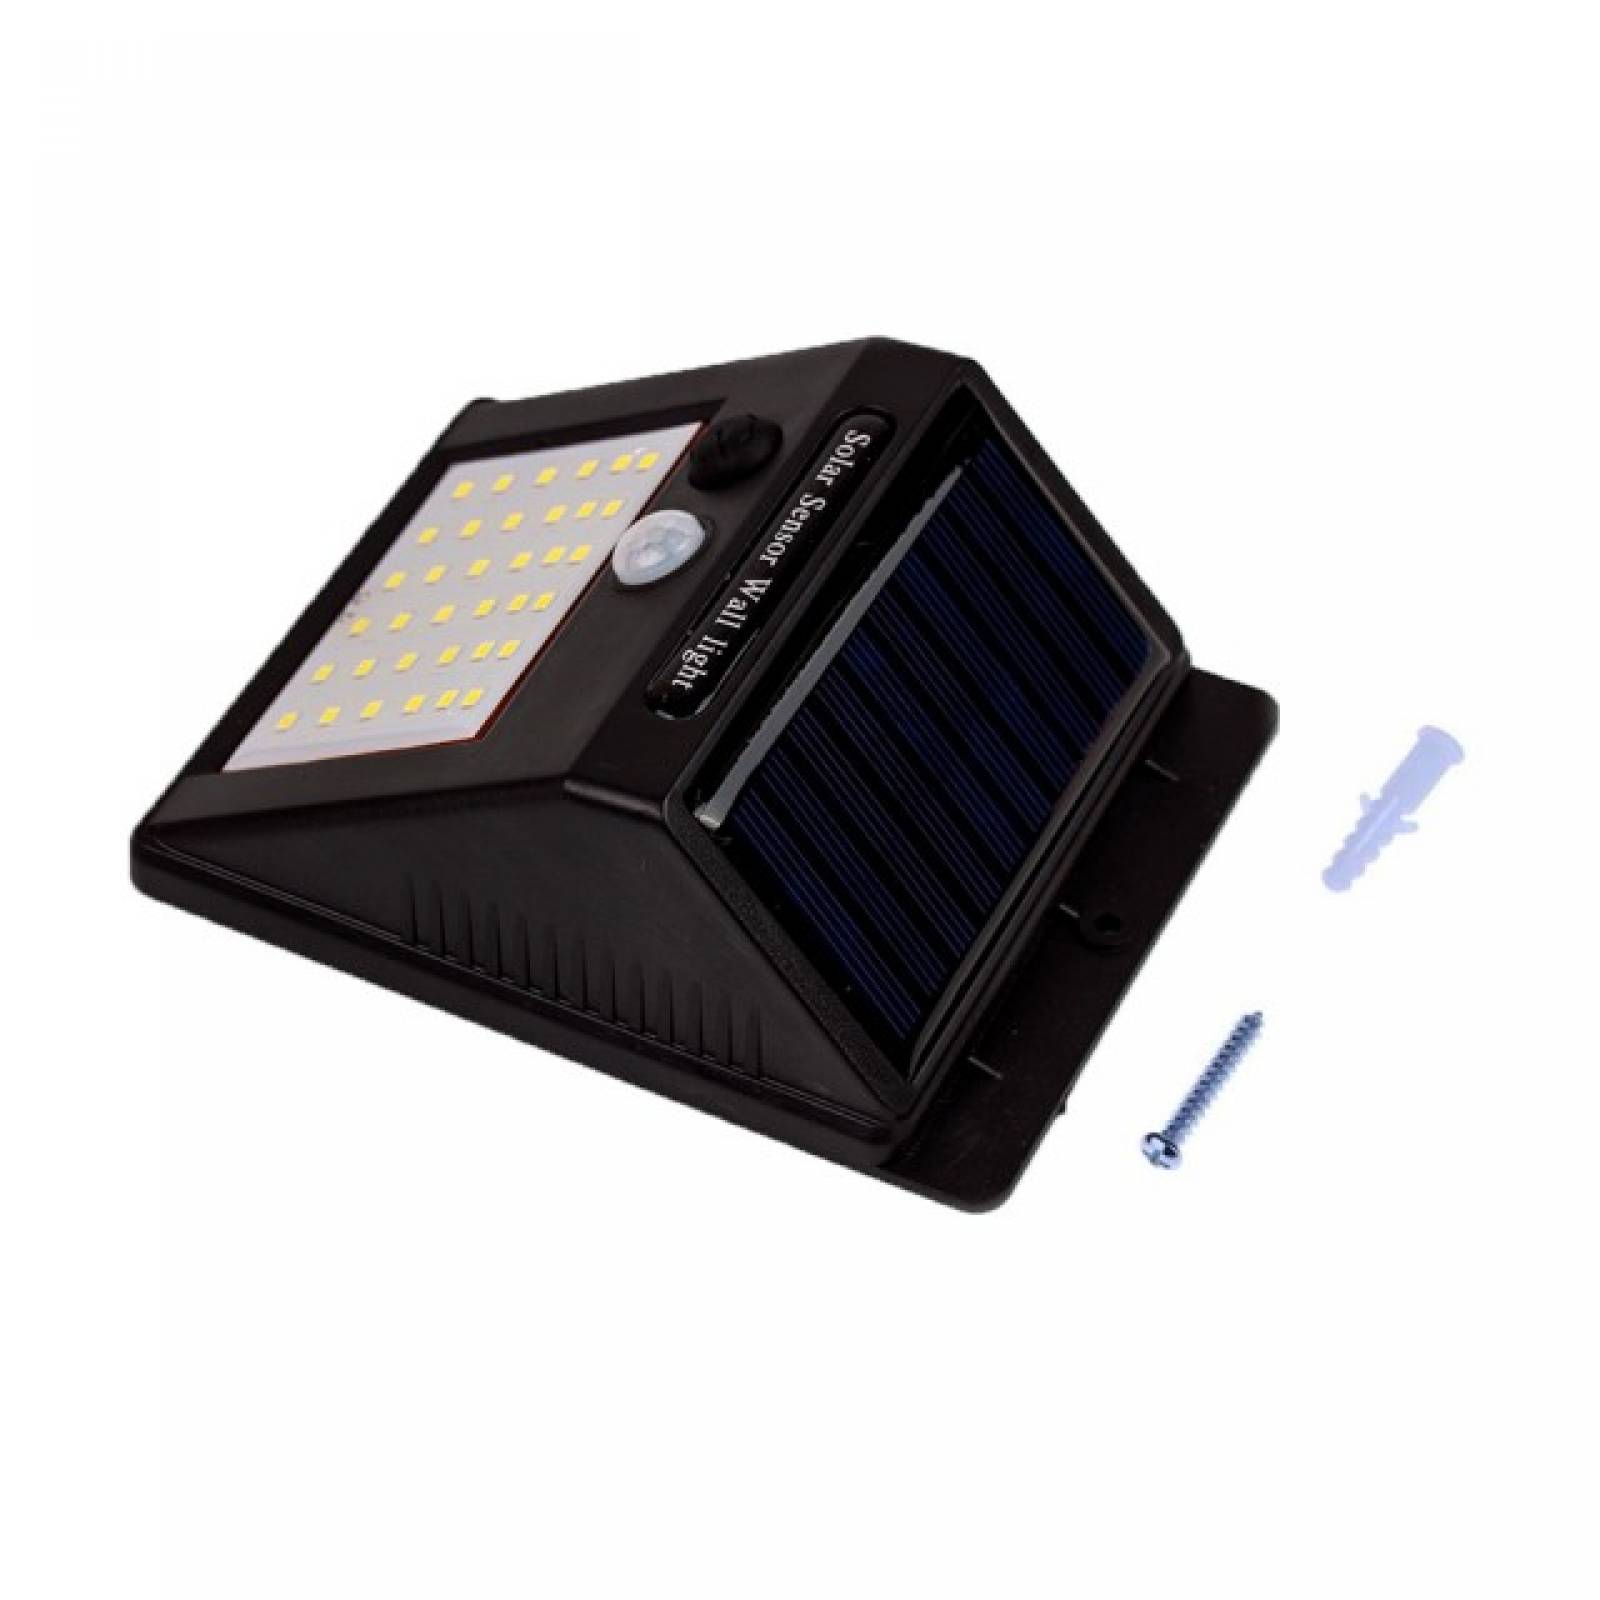 2 lámparas Solar Con 30 Leds Sensor De Movimiento Impermeable al 30%